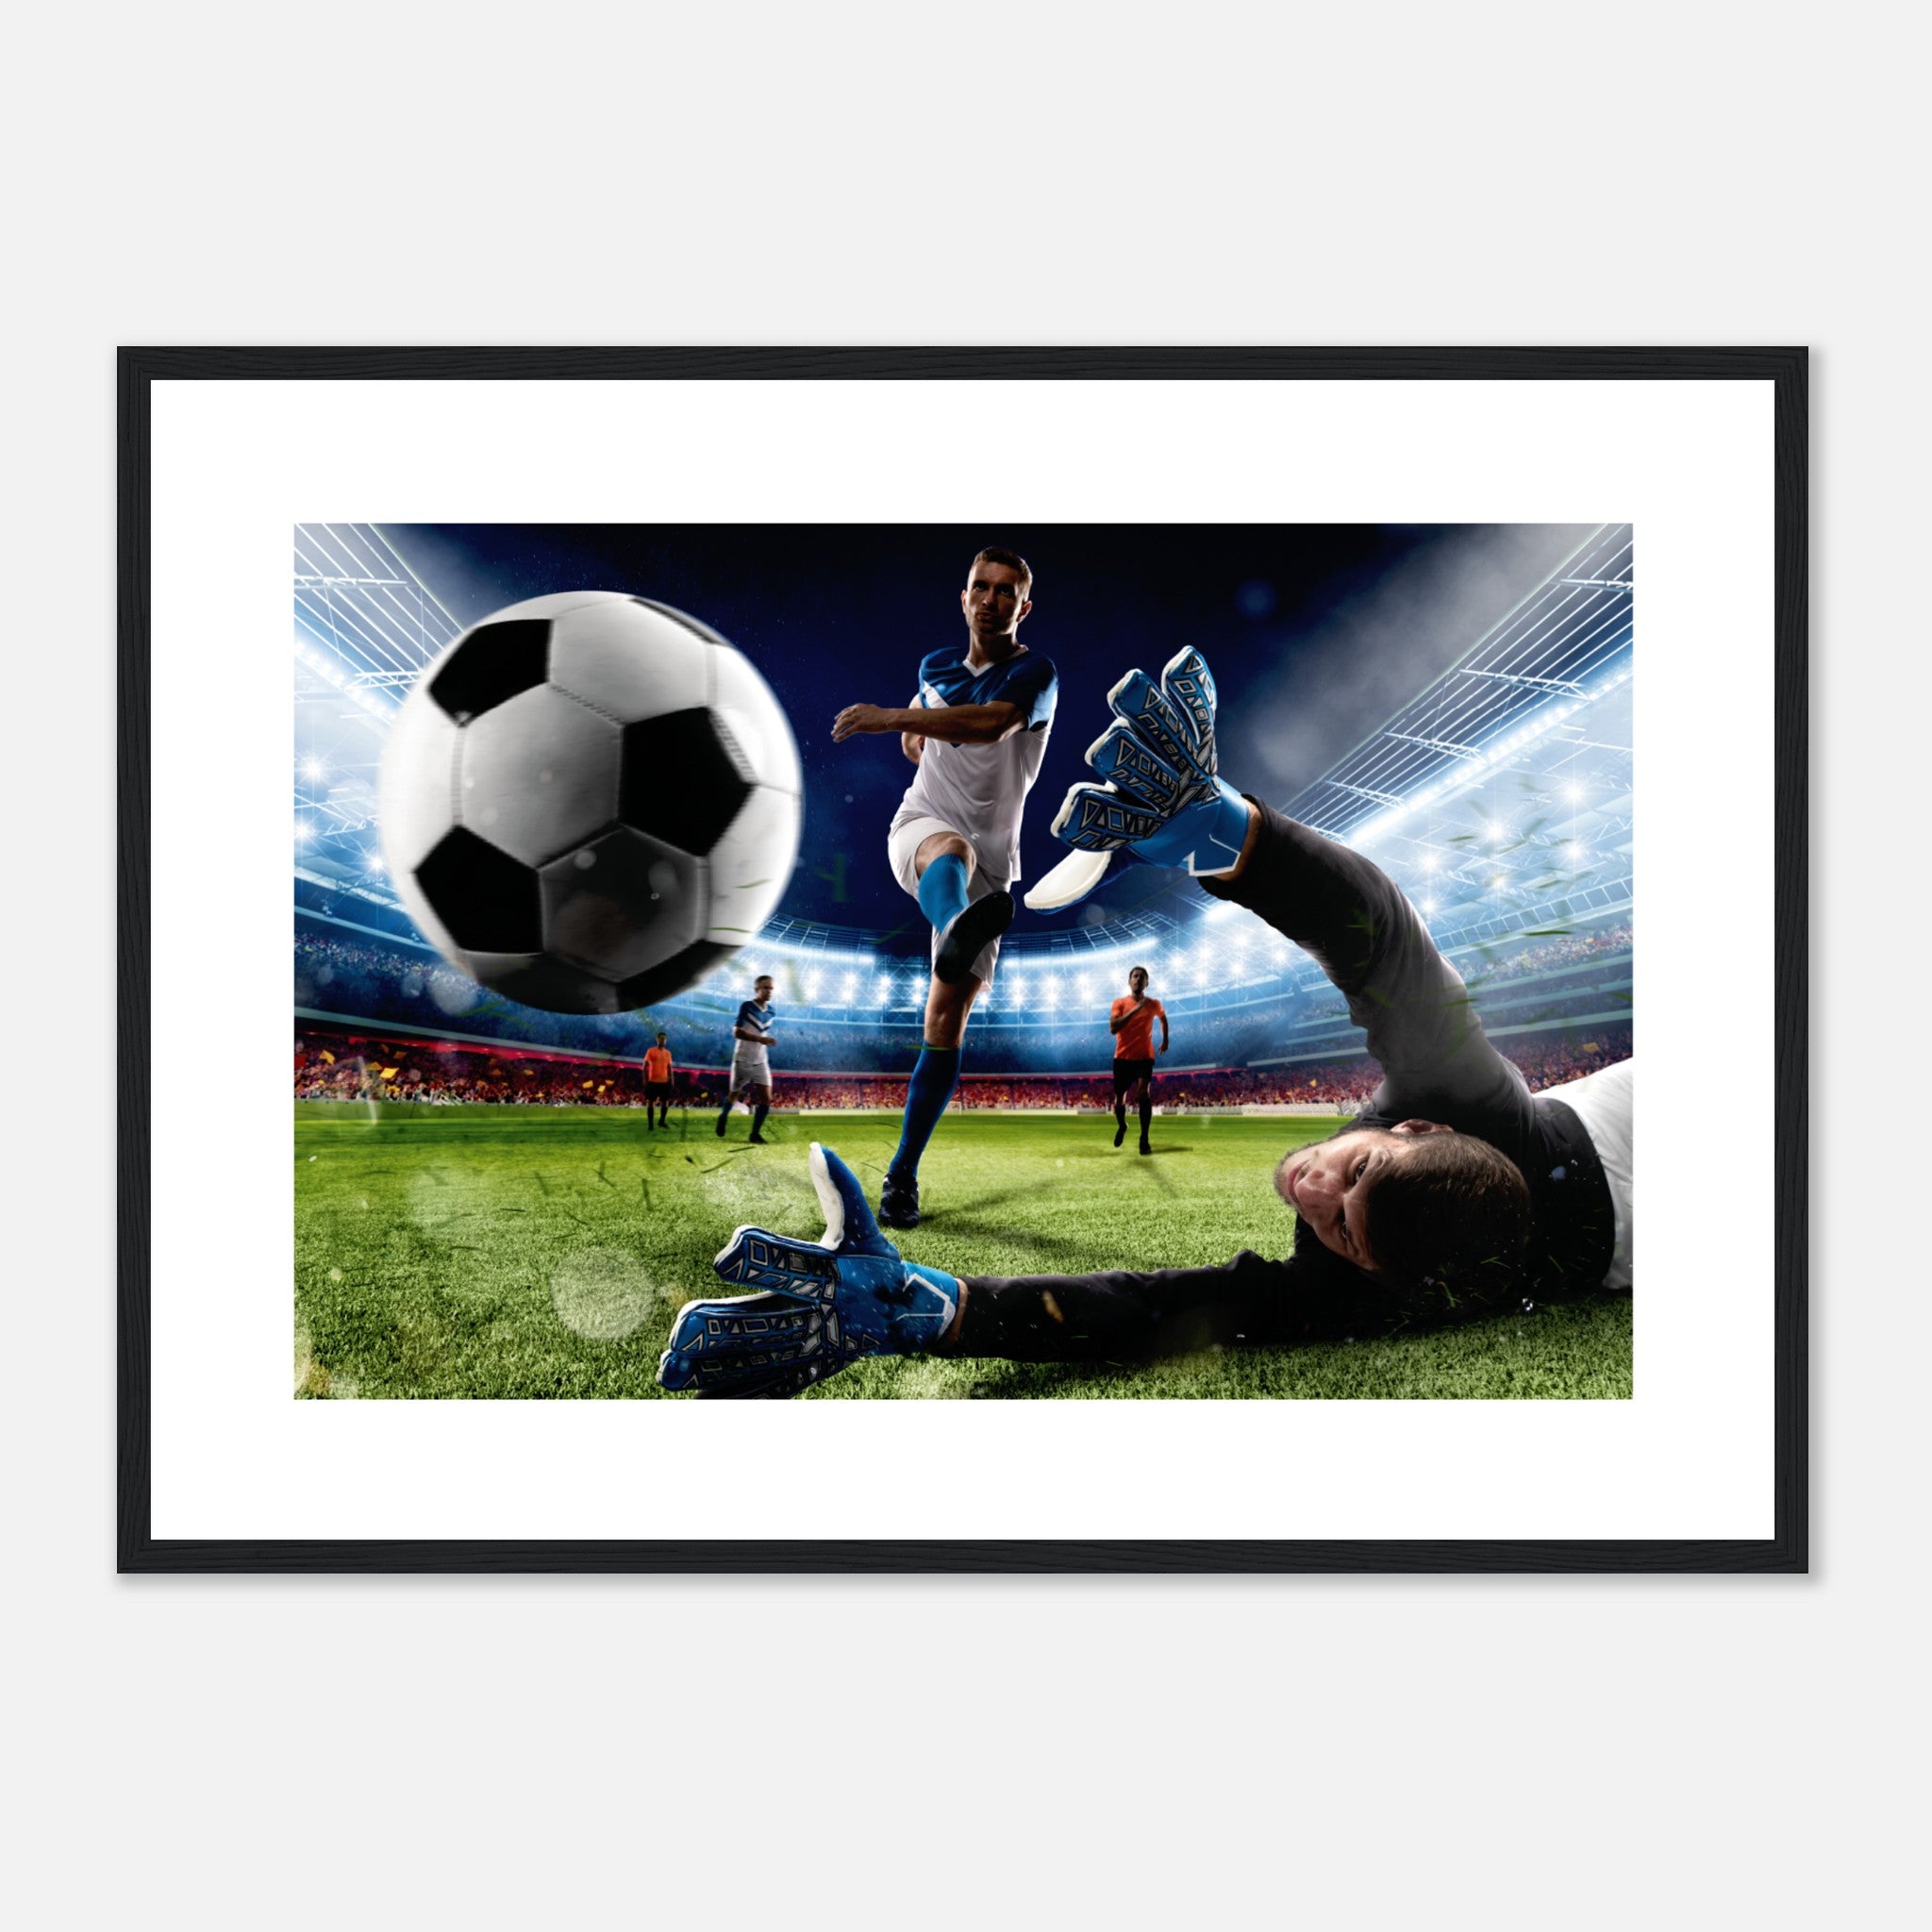 Goalkeeper Kicks the Ball in the Stadium Poster